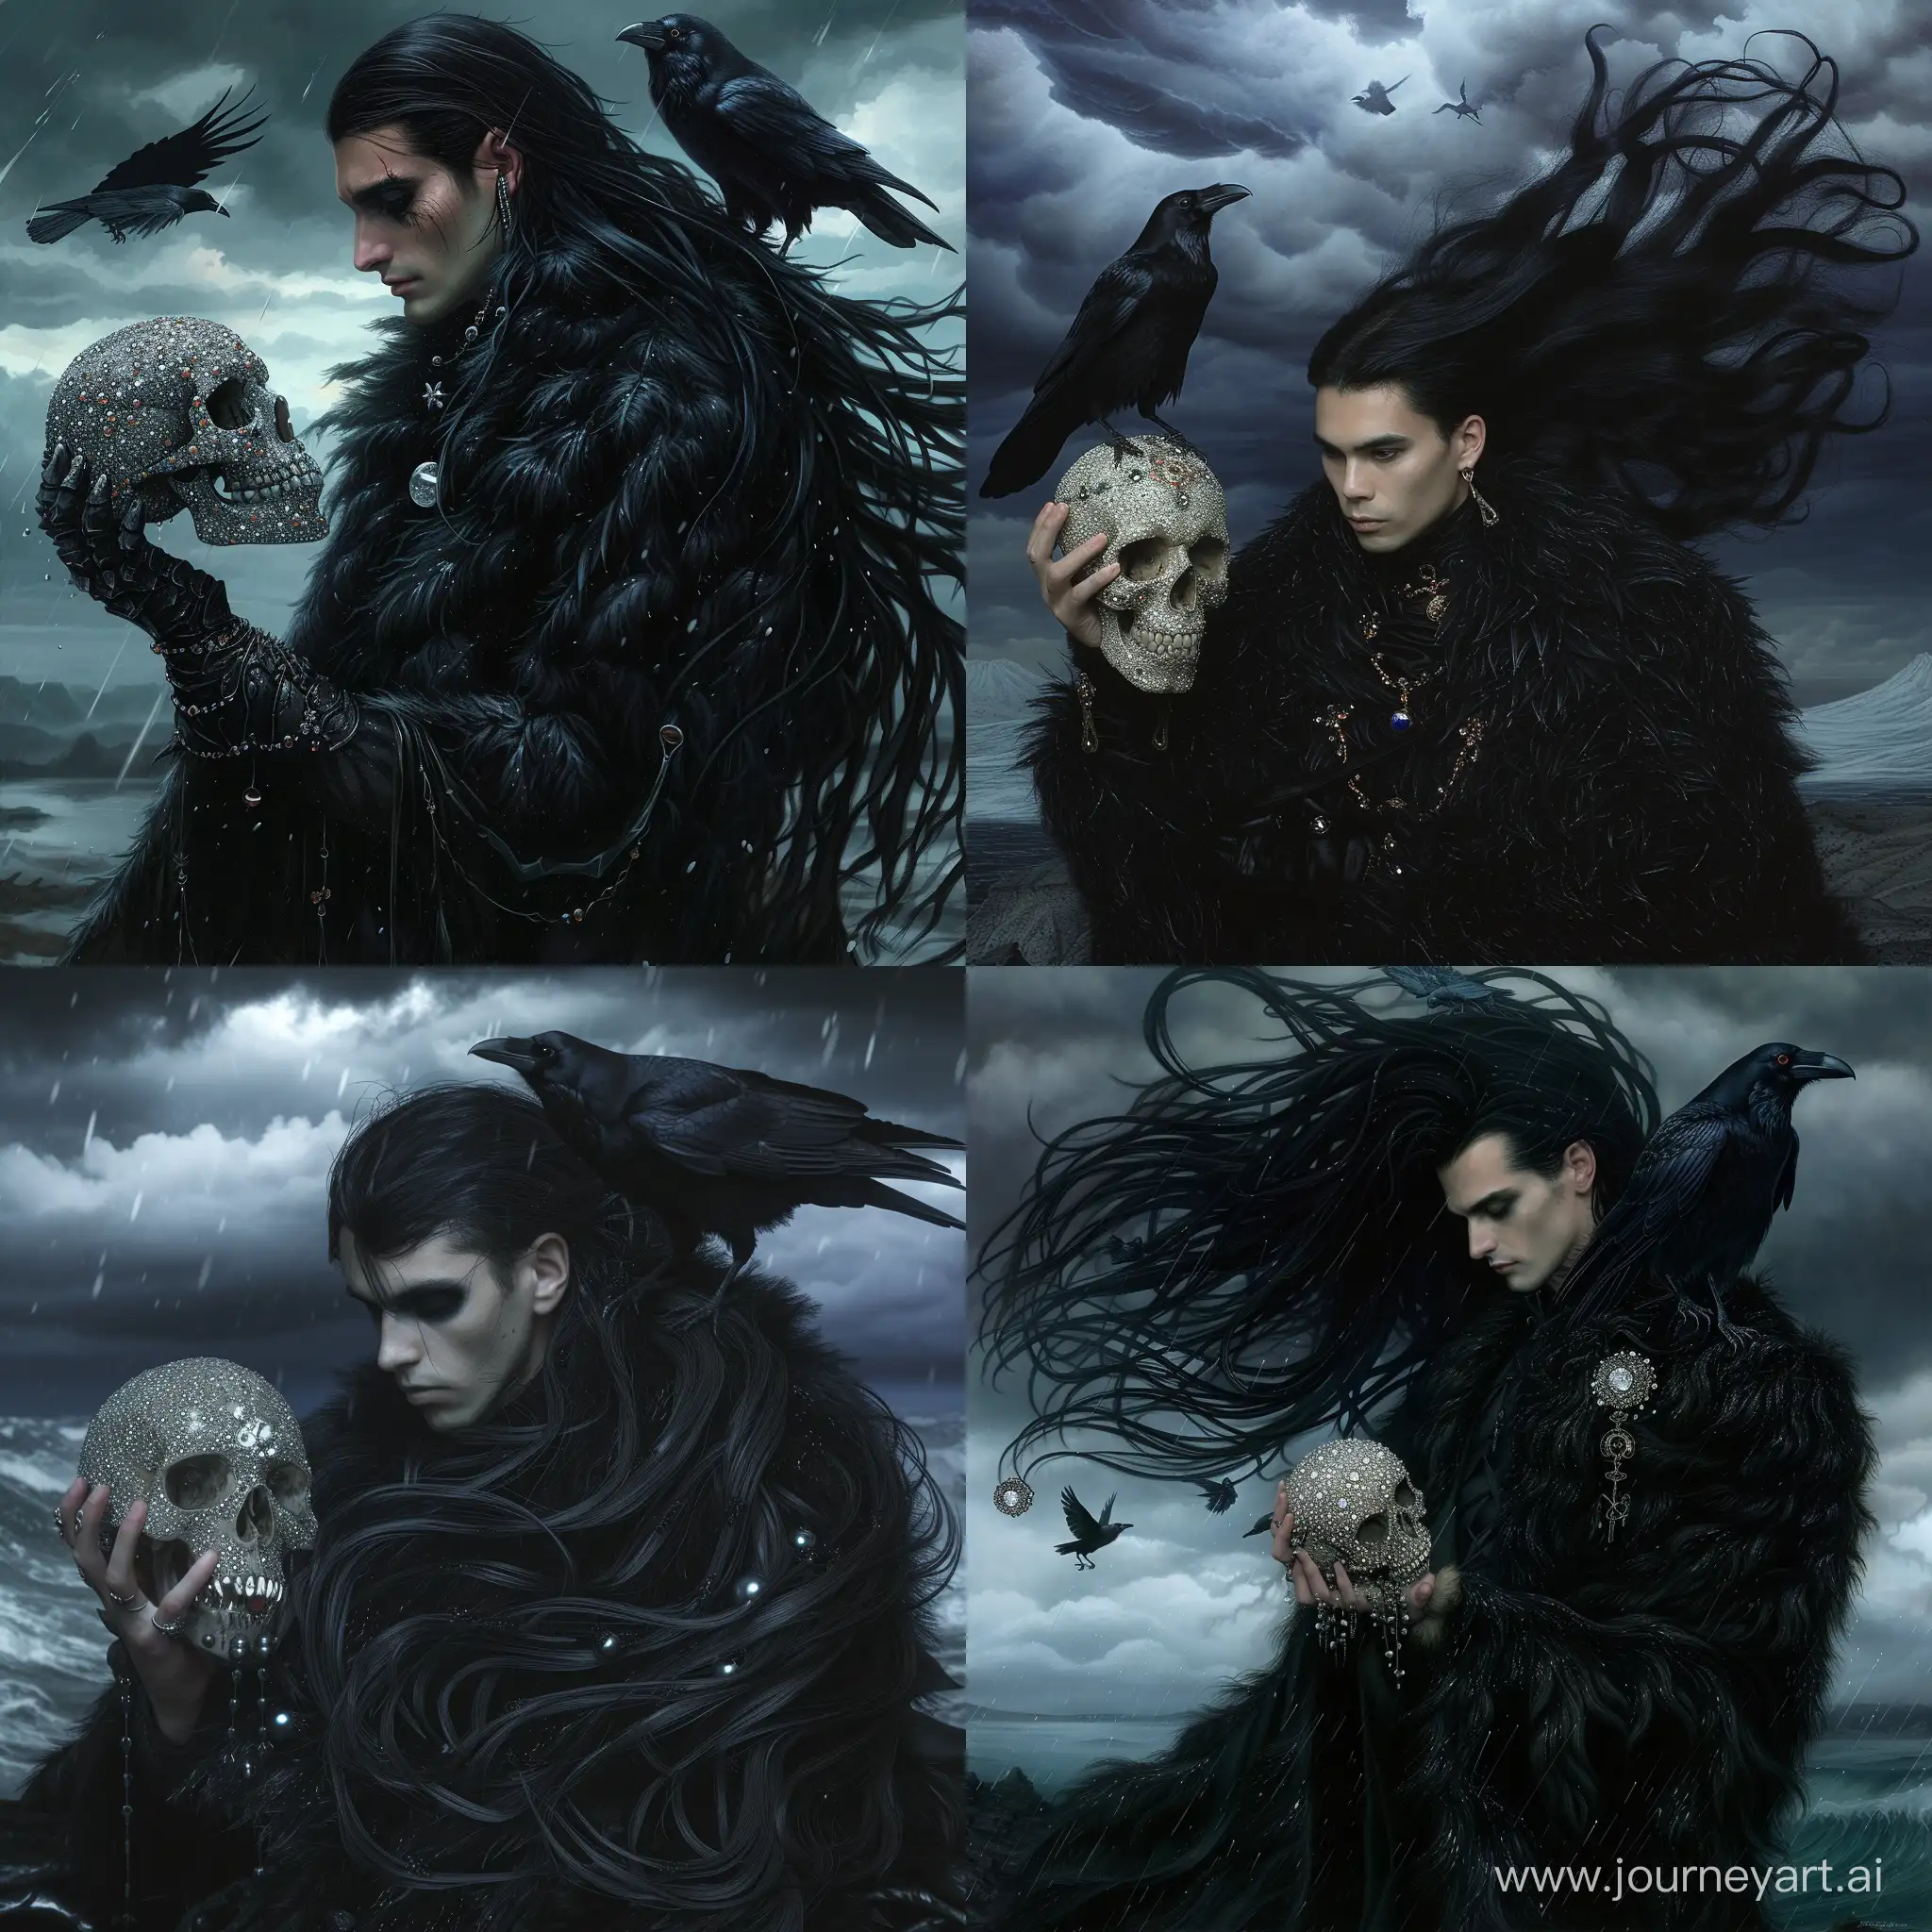 Mysterious-Figure-in-Black-Fur-Coat-Holding-RhinestoneStudded-Skull-under-Stormy-Night-Sky